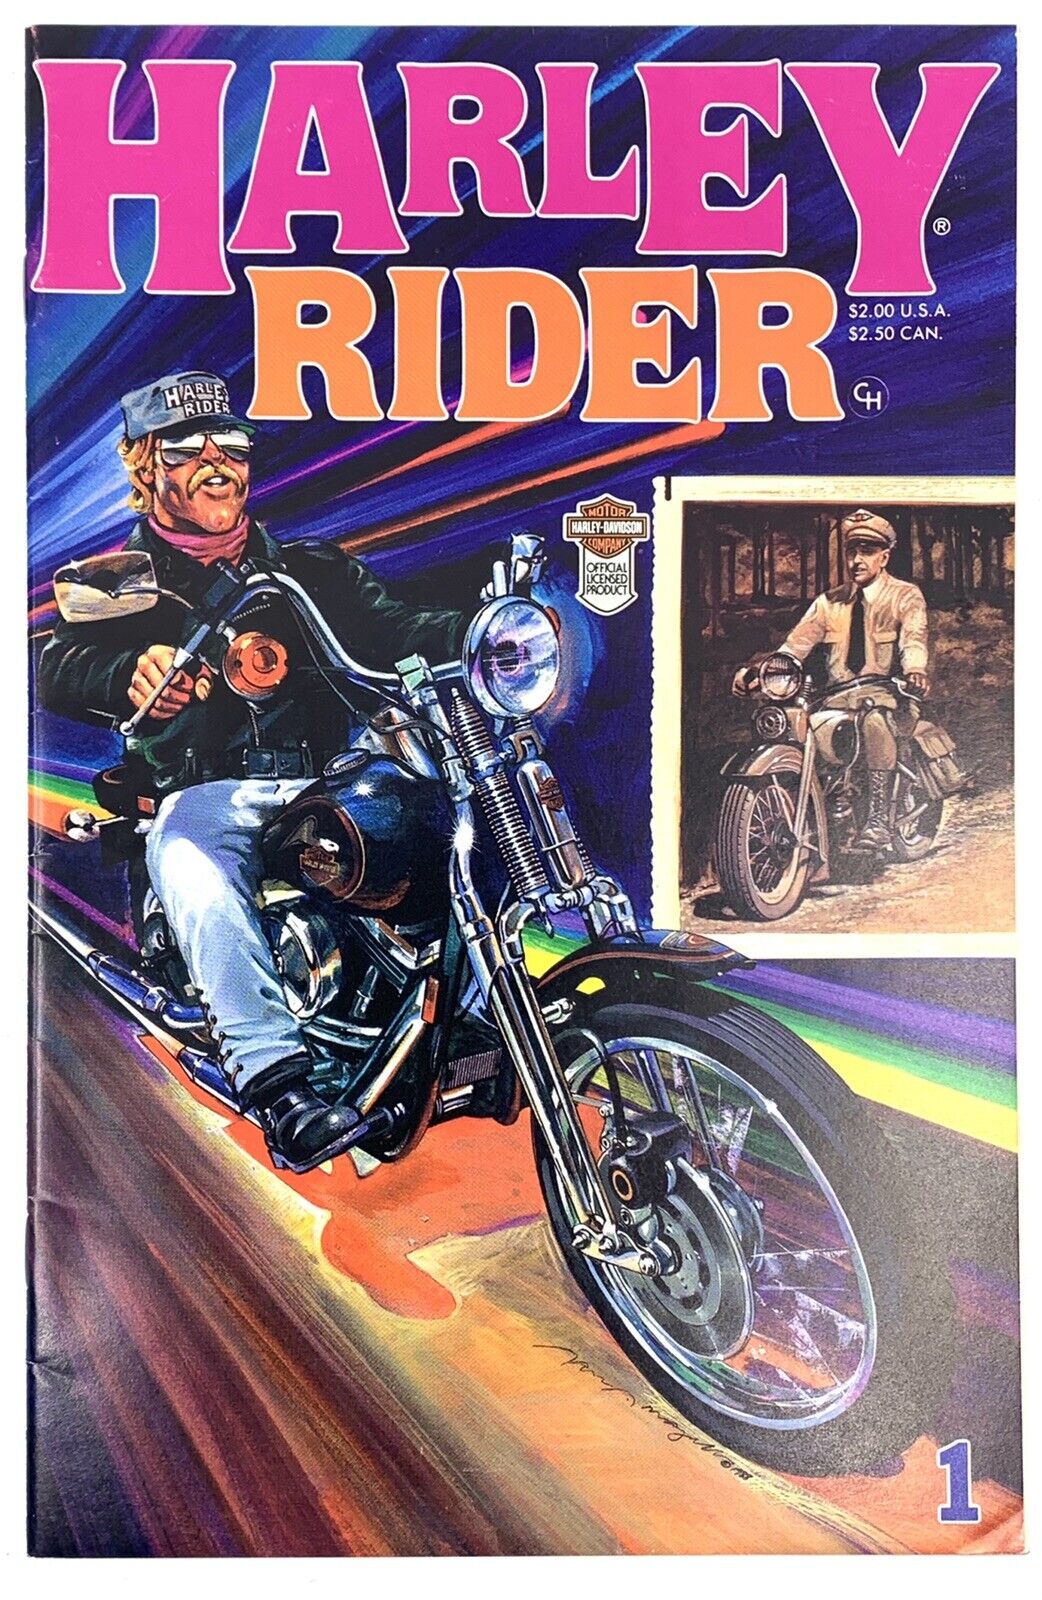 Harley Davidson Comic Book Harley Rider #1 Biker  Carl Hungness Publishing 1988 